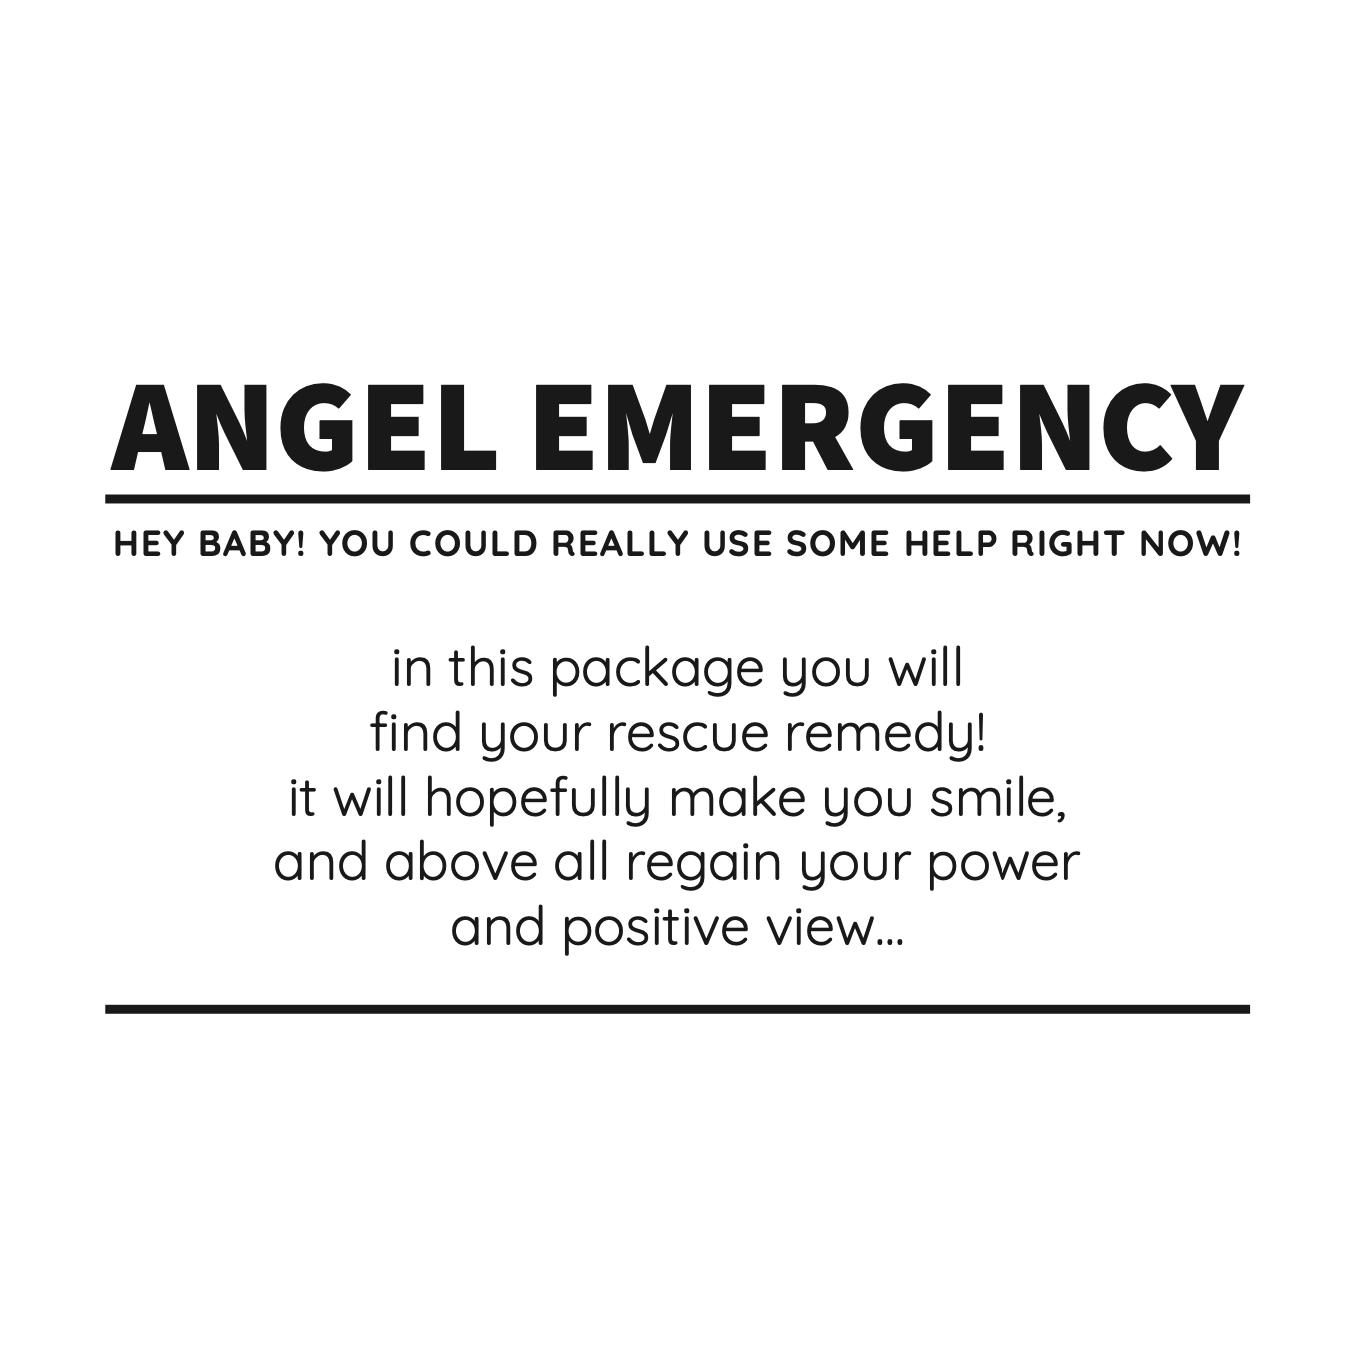 Angel Emergency